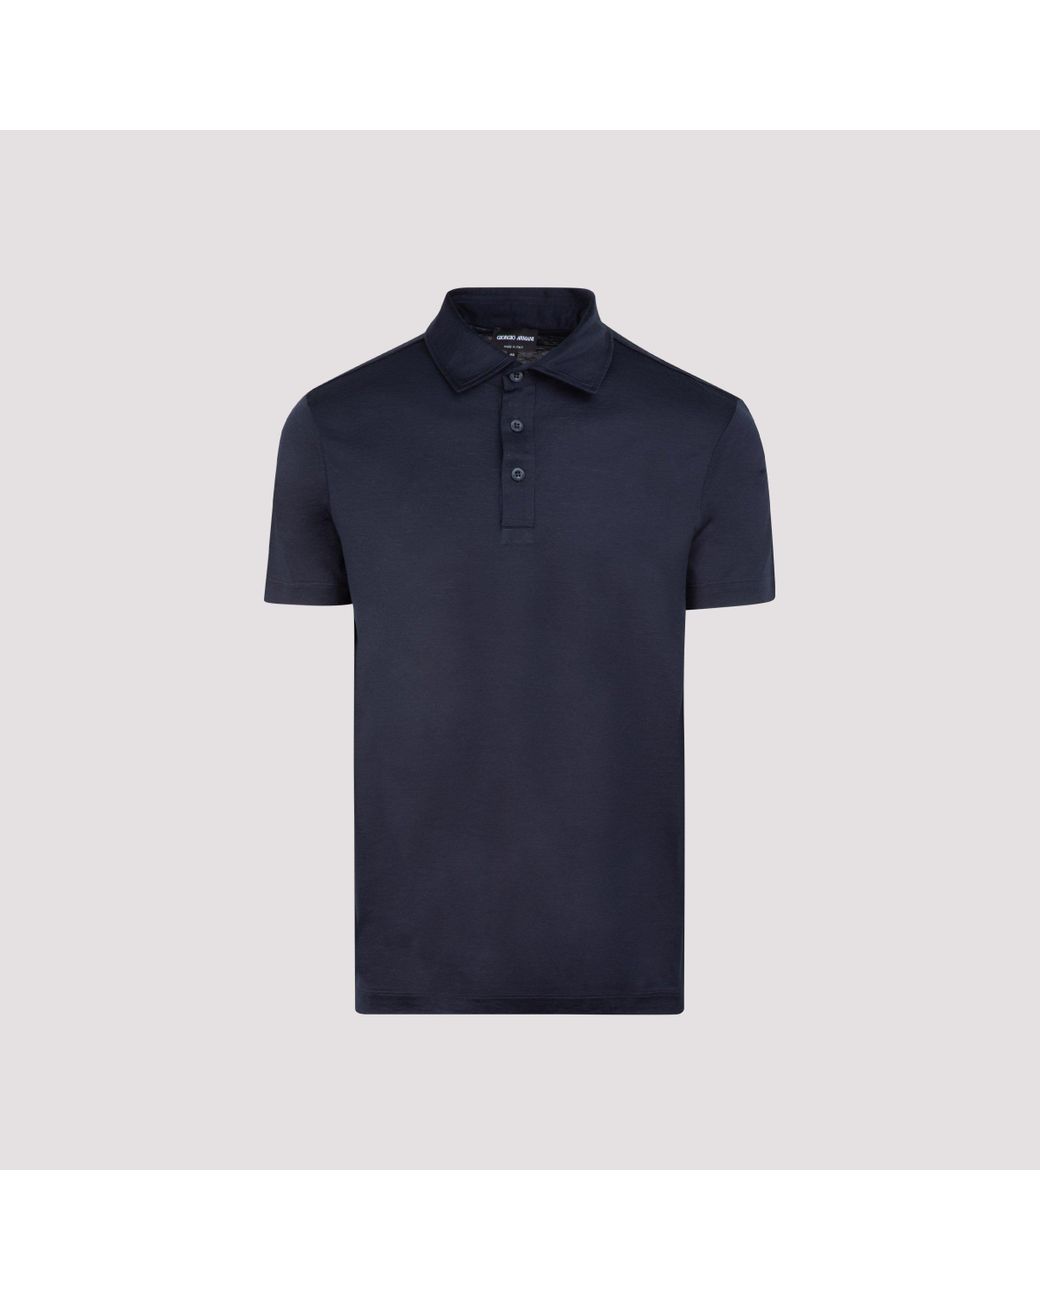 Giorgio Armani Silk Short-sleeve Polo Shirt in Blue for Men - Lyst